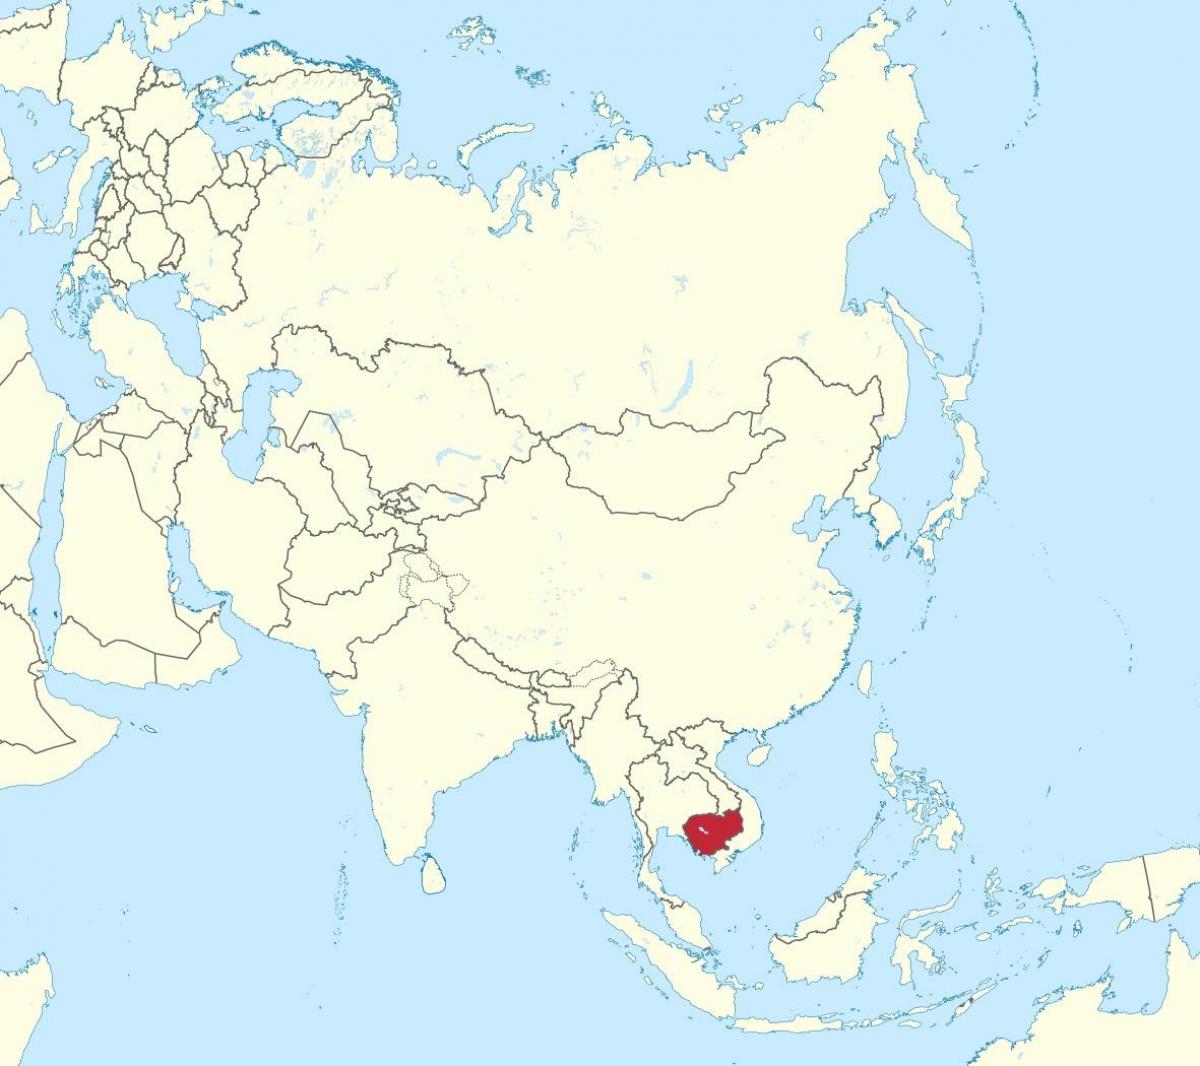 Map of Cambodia in asia